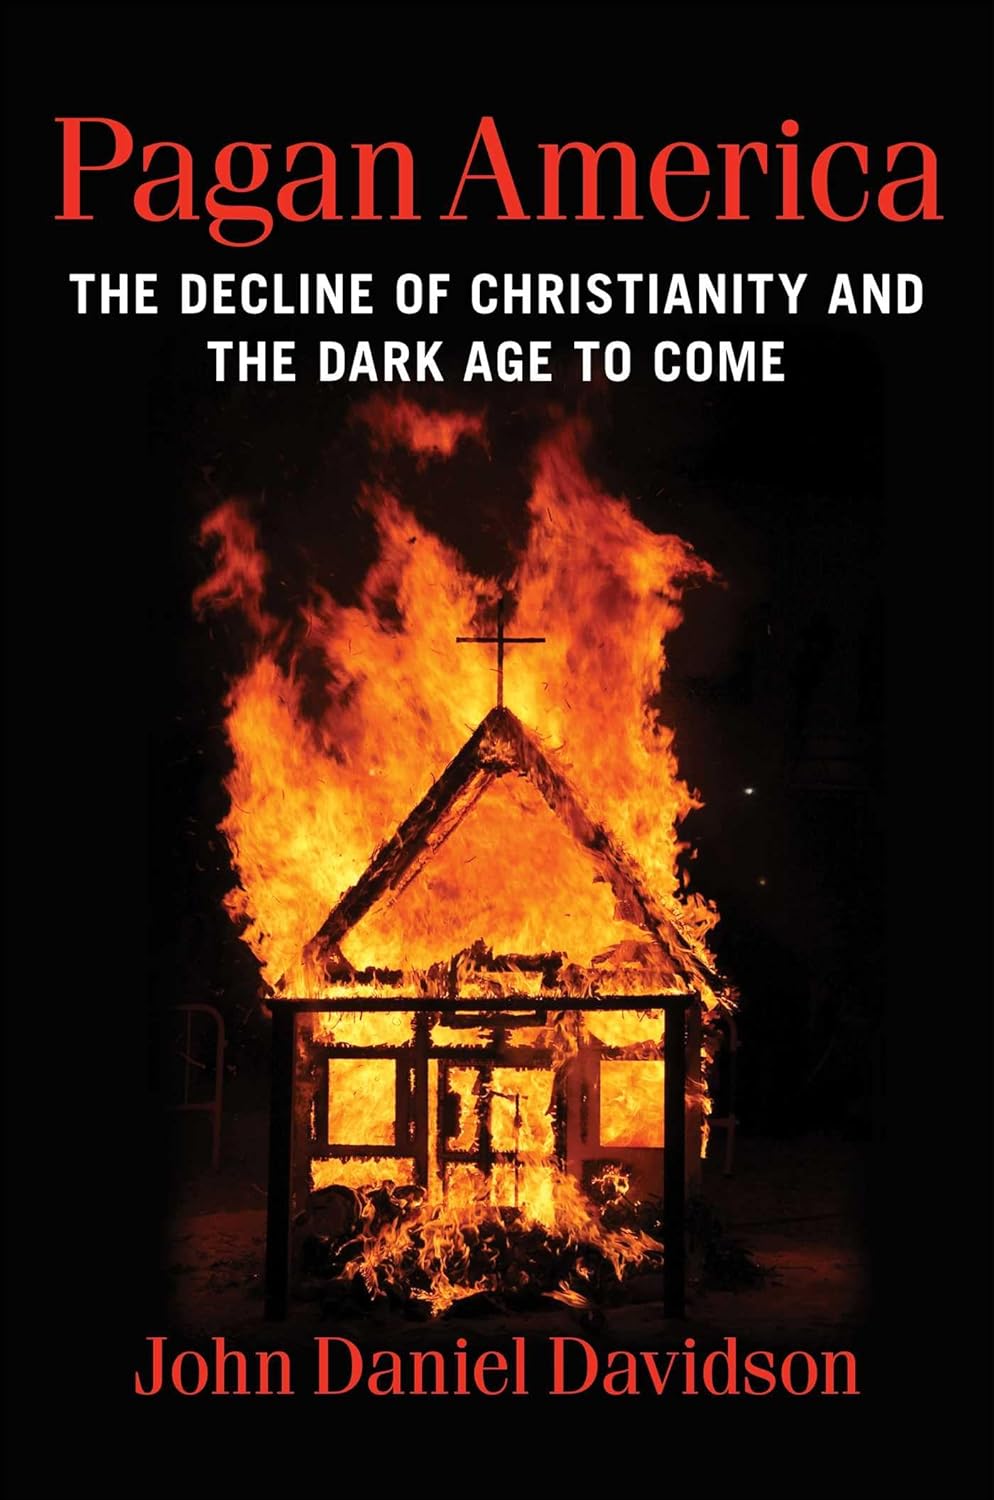 Editorial: New book is ripe with dangerous anti-Pagan rhetoric [Video]